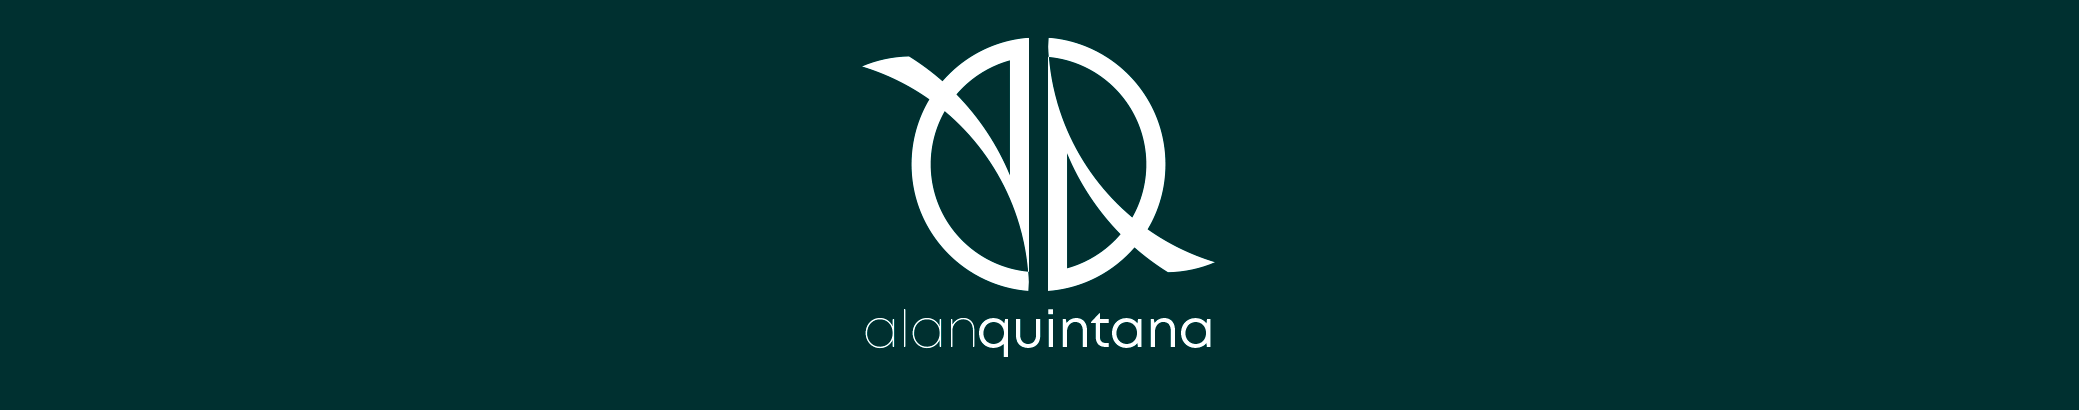 Alan Quintana's profile banner